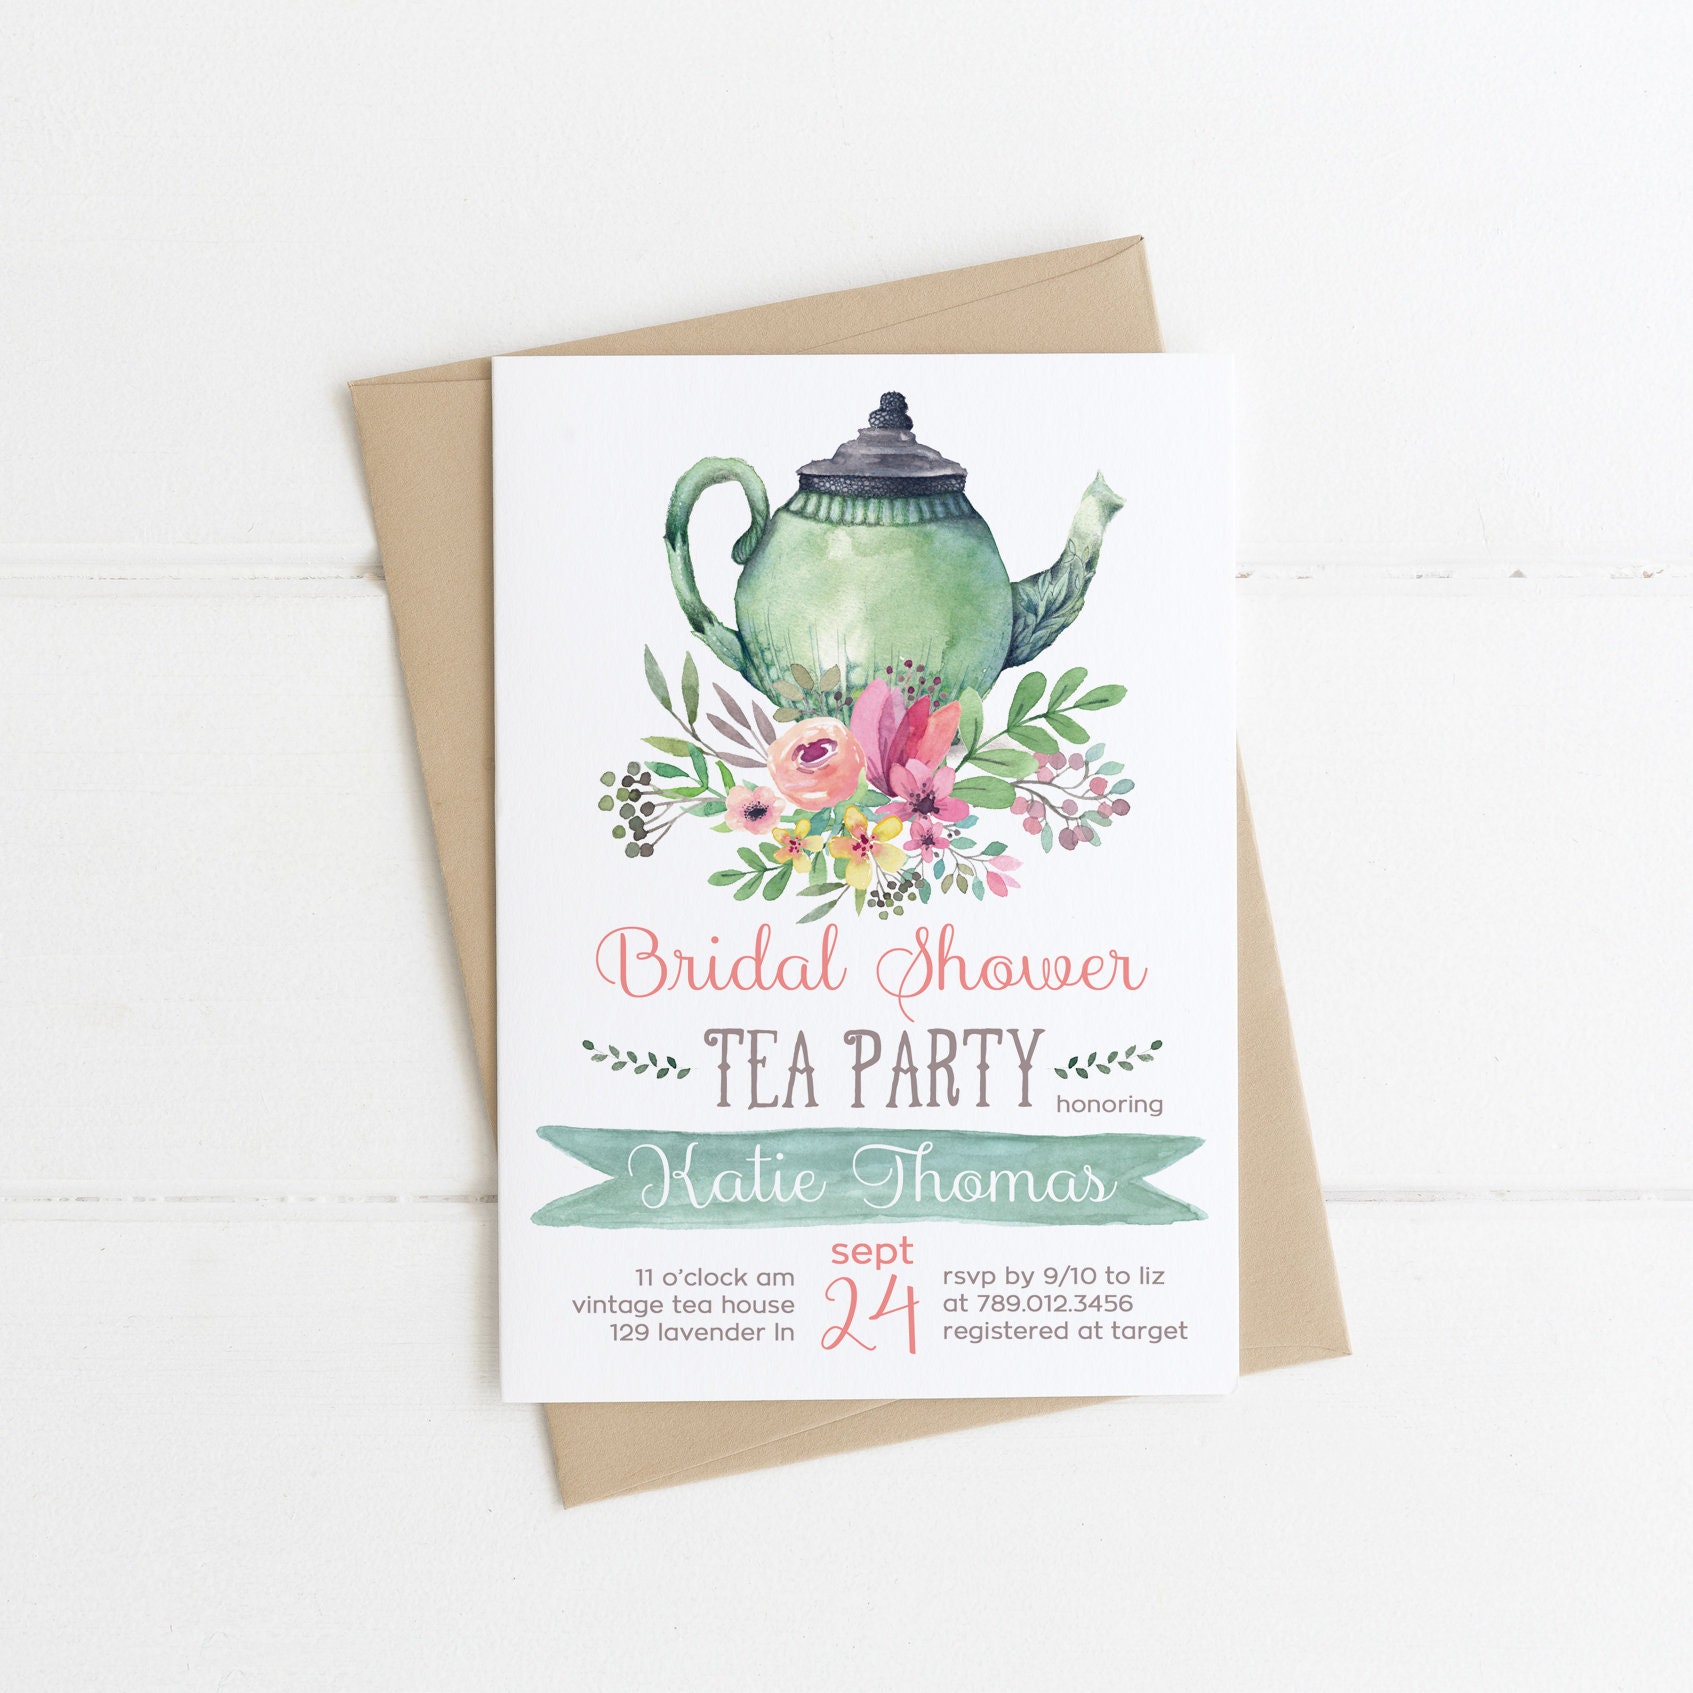 Tea Party Bridal Shower Invitations Wedding Shower Invite | Etsy